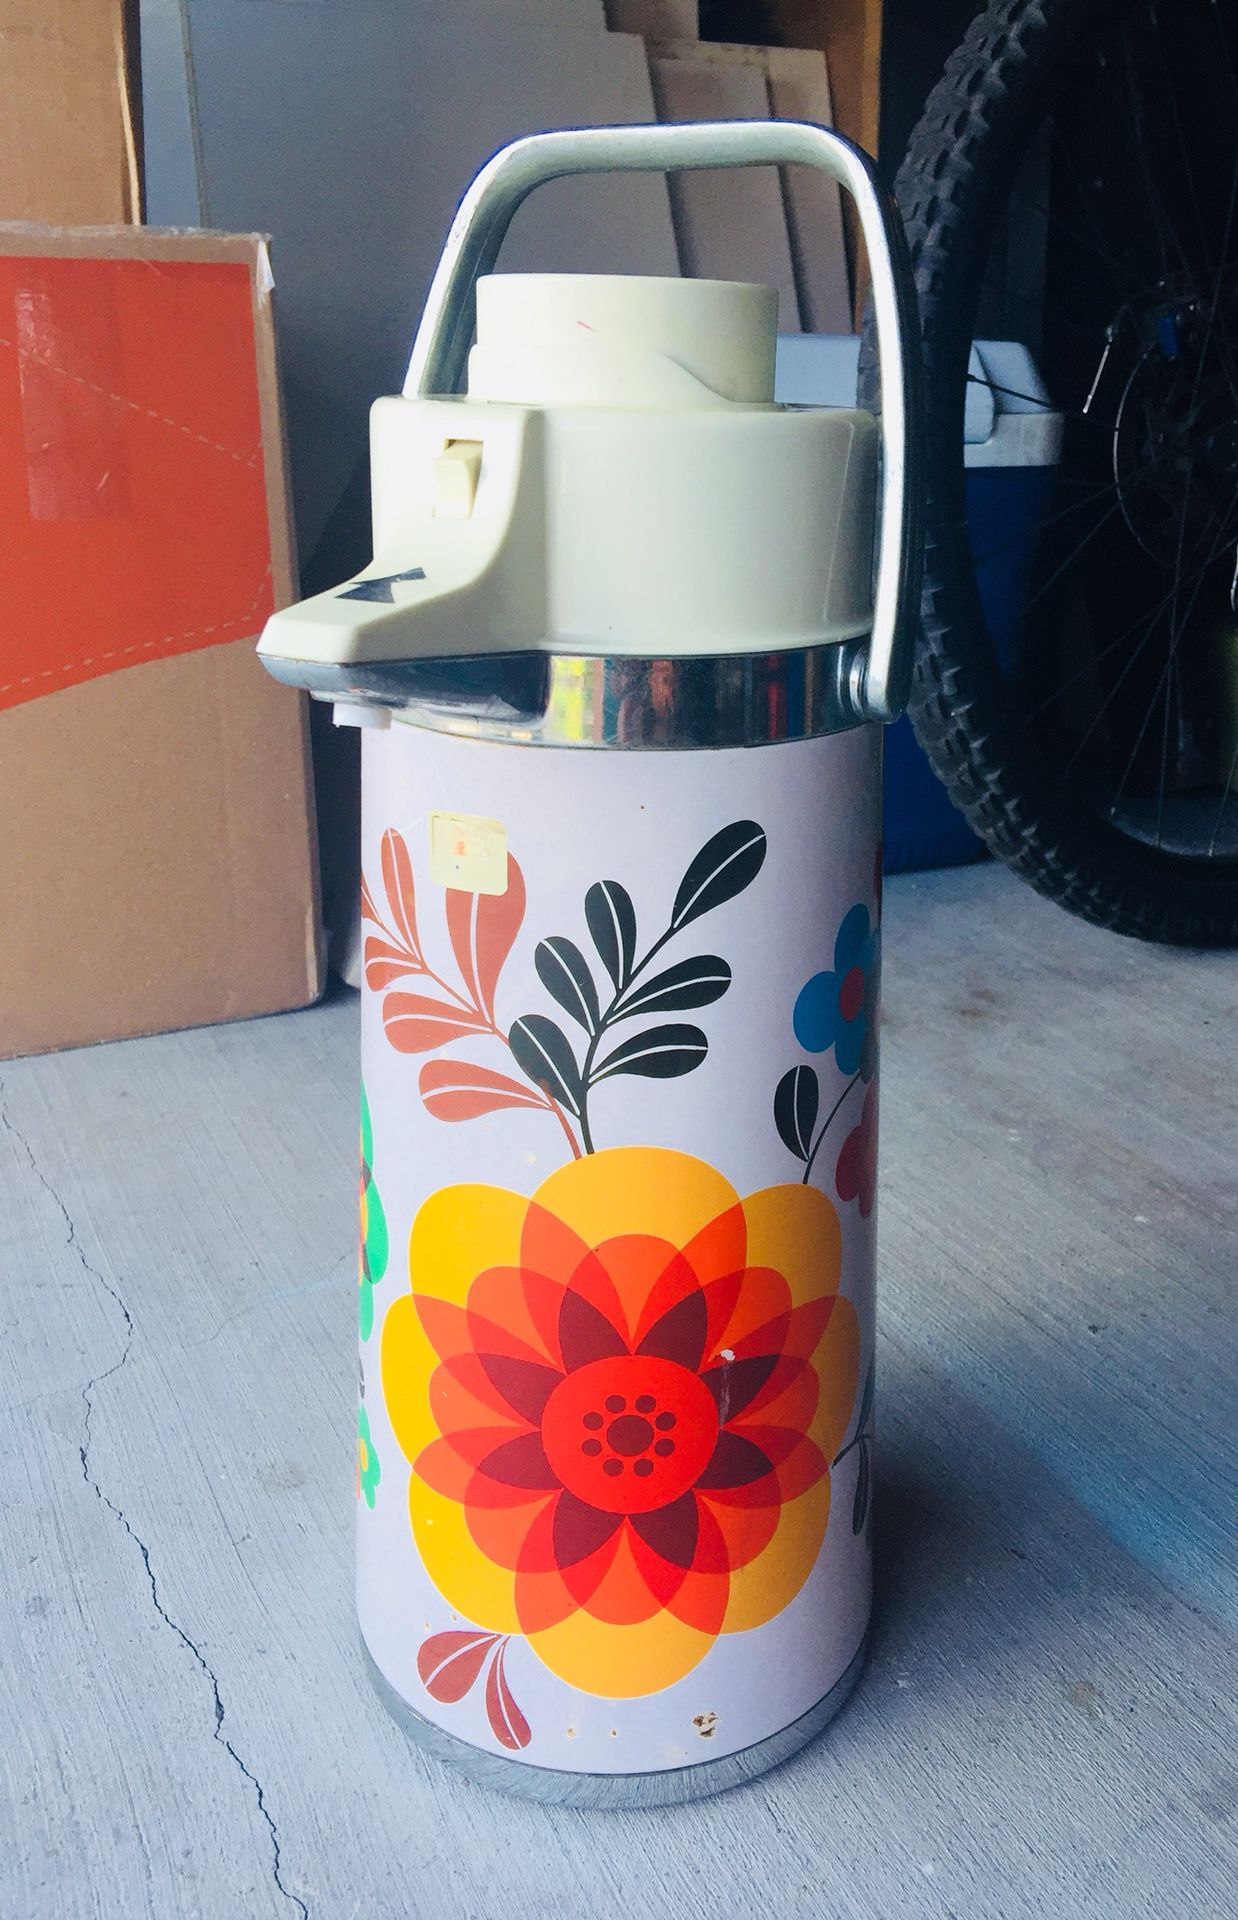 VINTAGE Apollo Air Pot Floral Roses Coffee Hot Beverage Dispenser